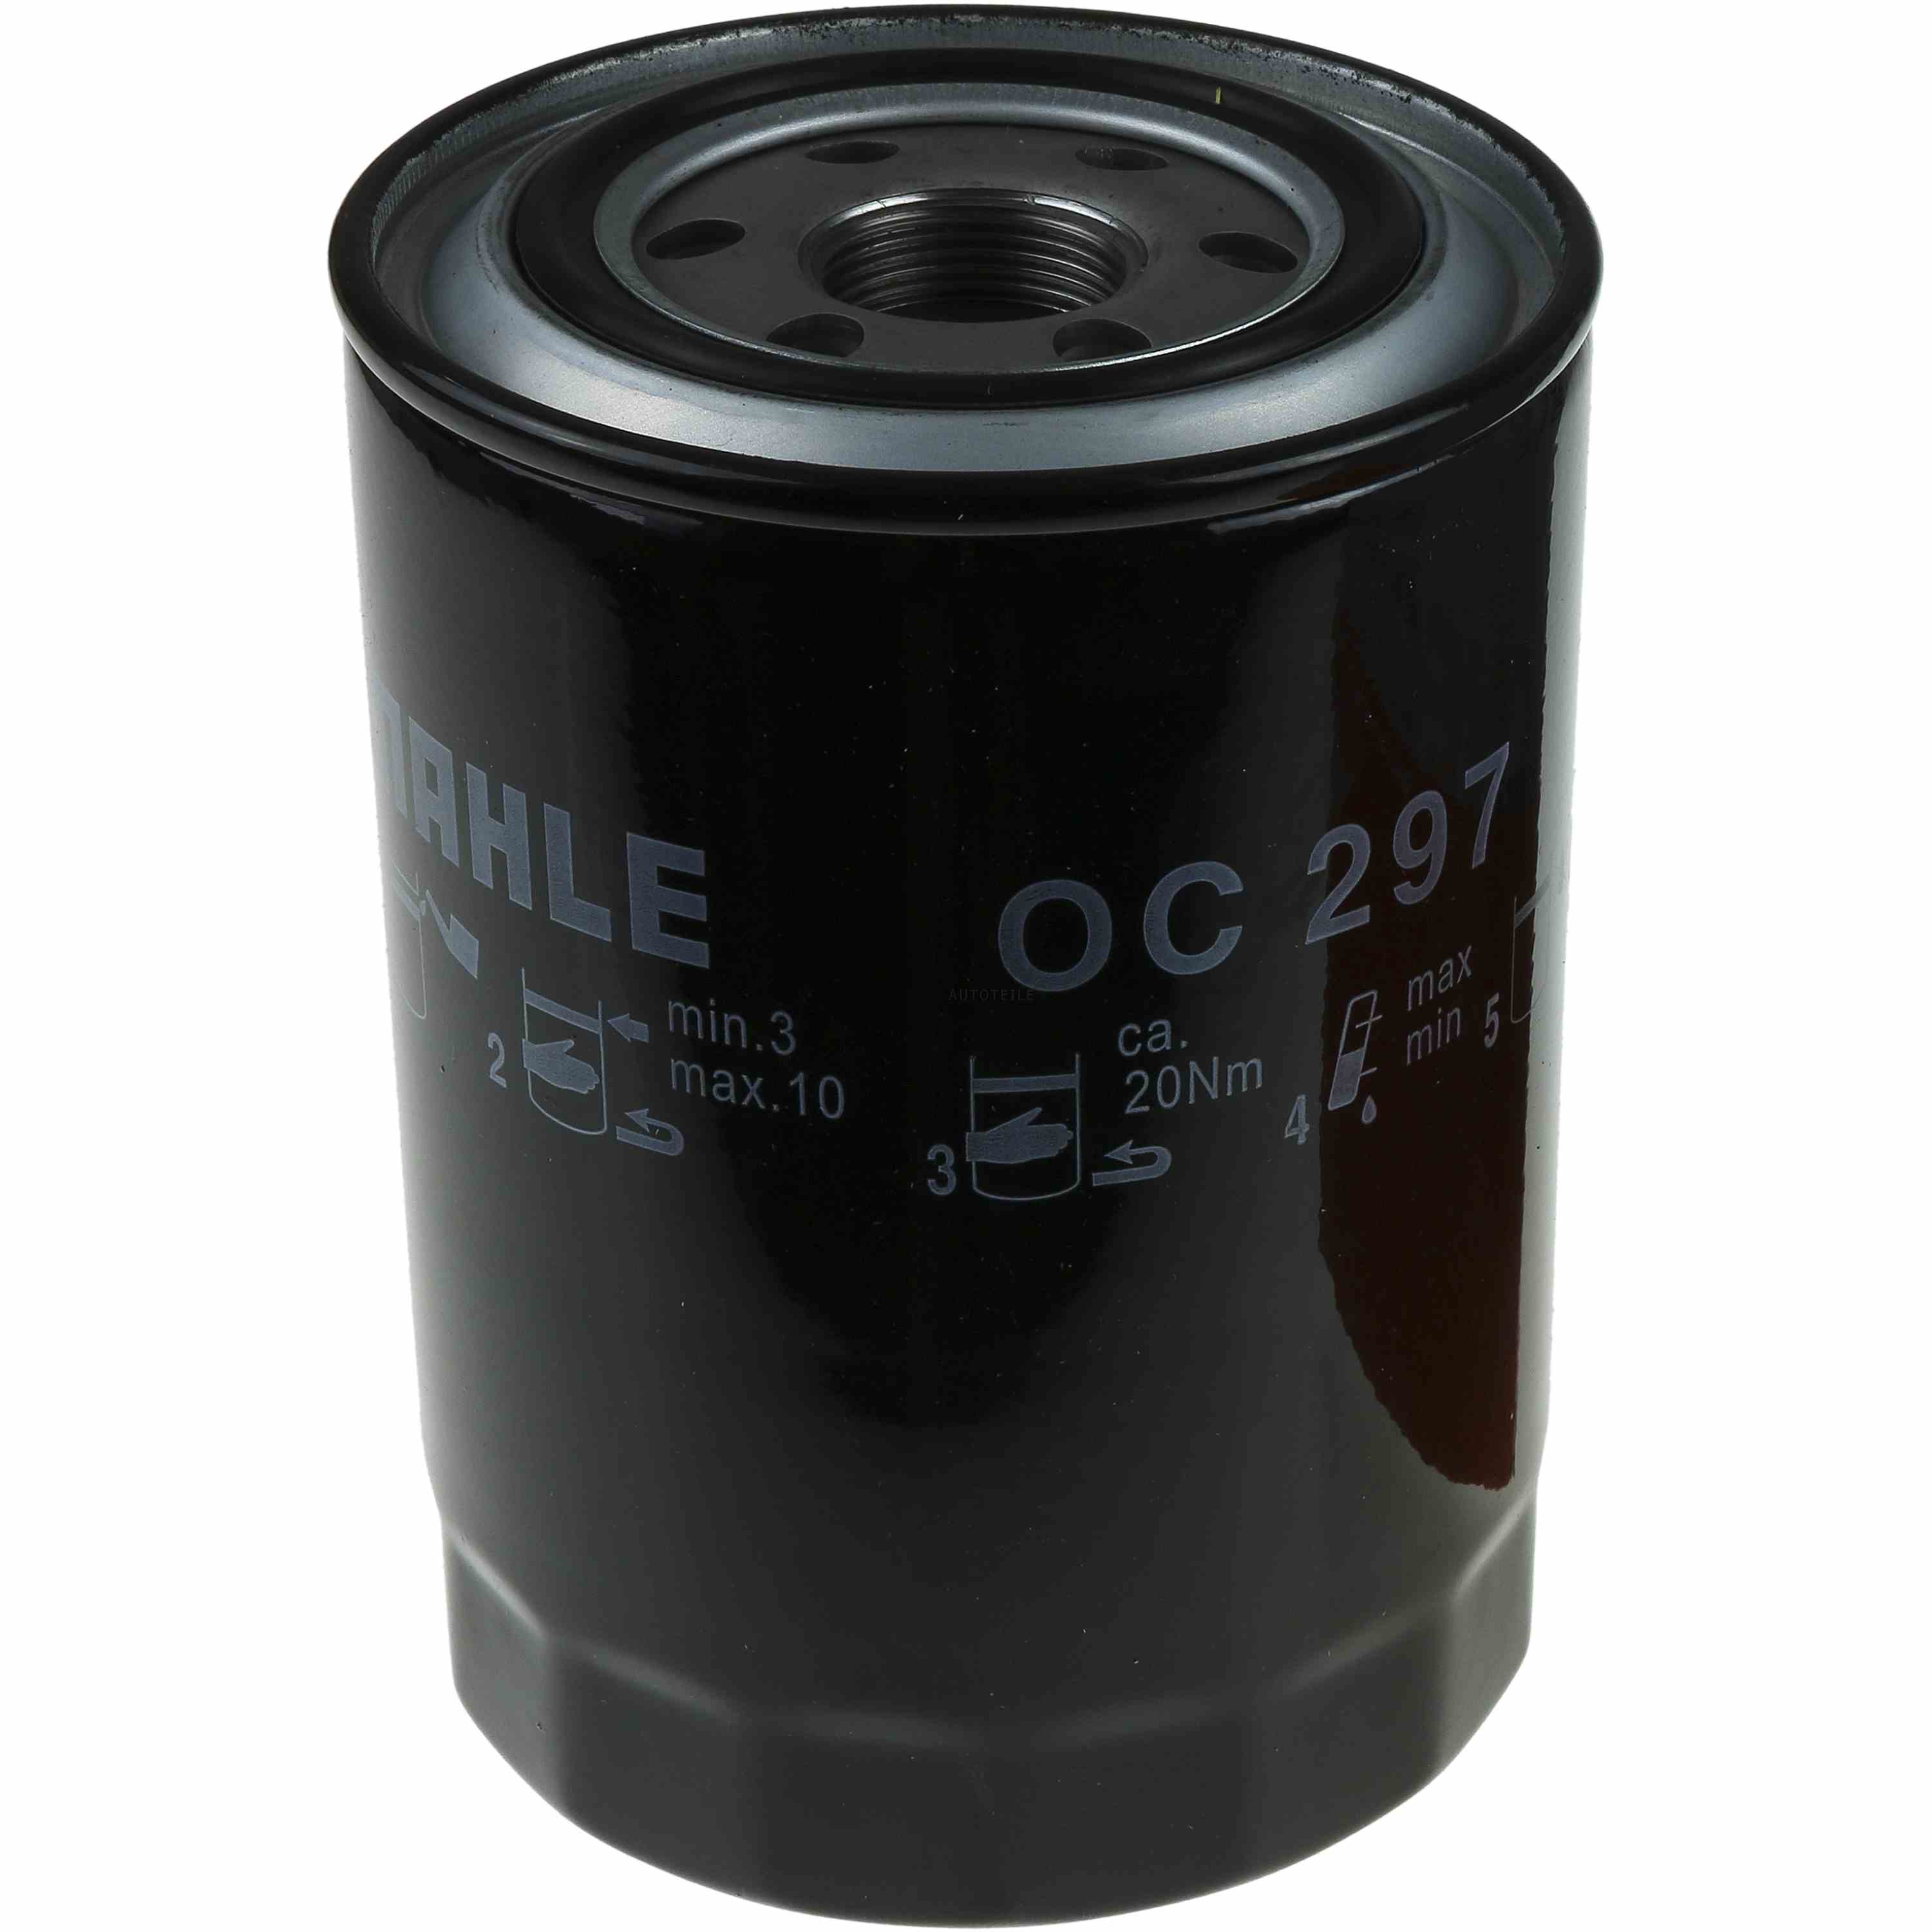 MAHLE Ölfilter OC 297 Oil Filter